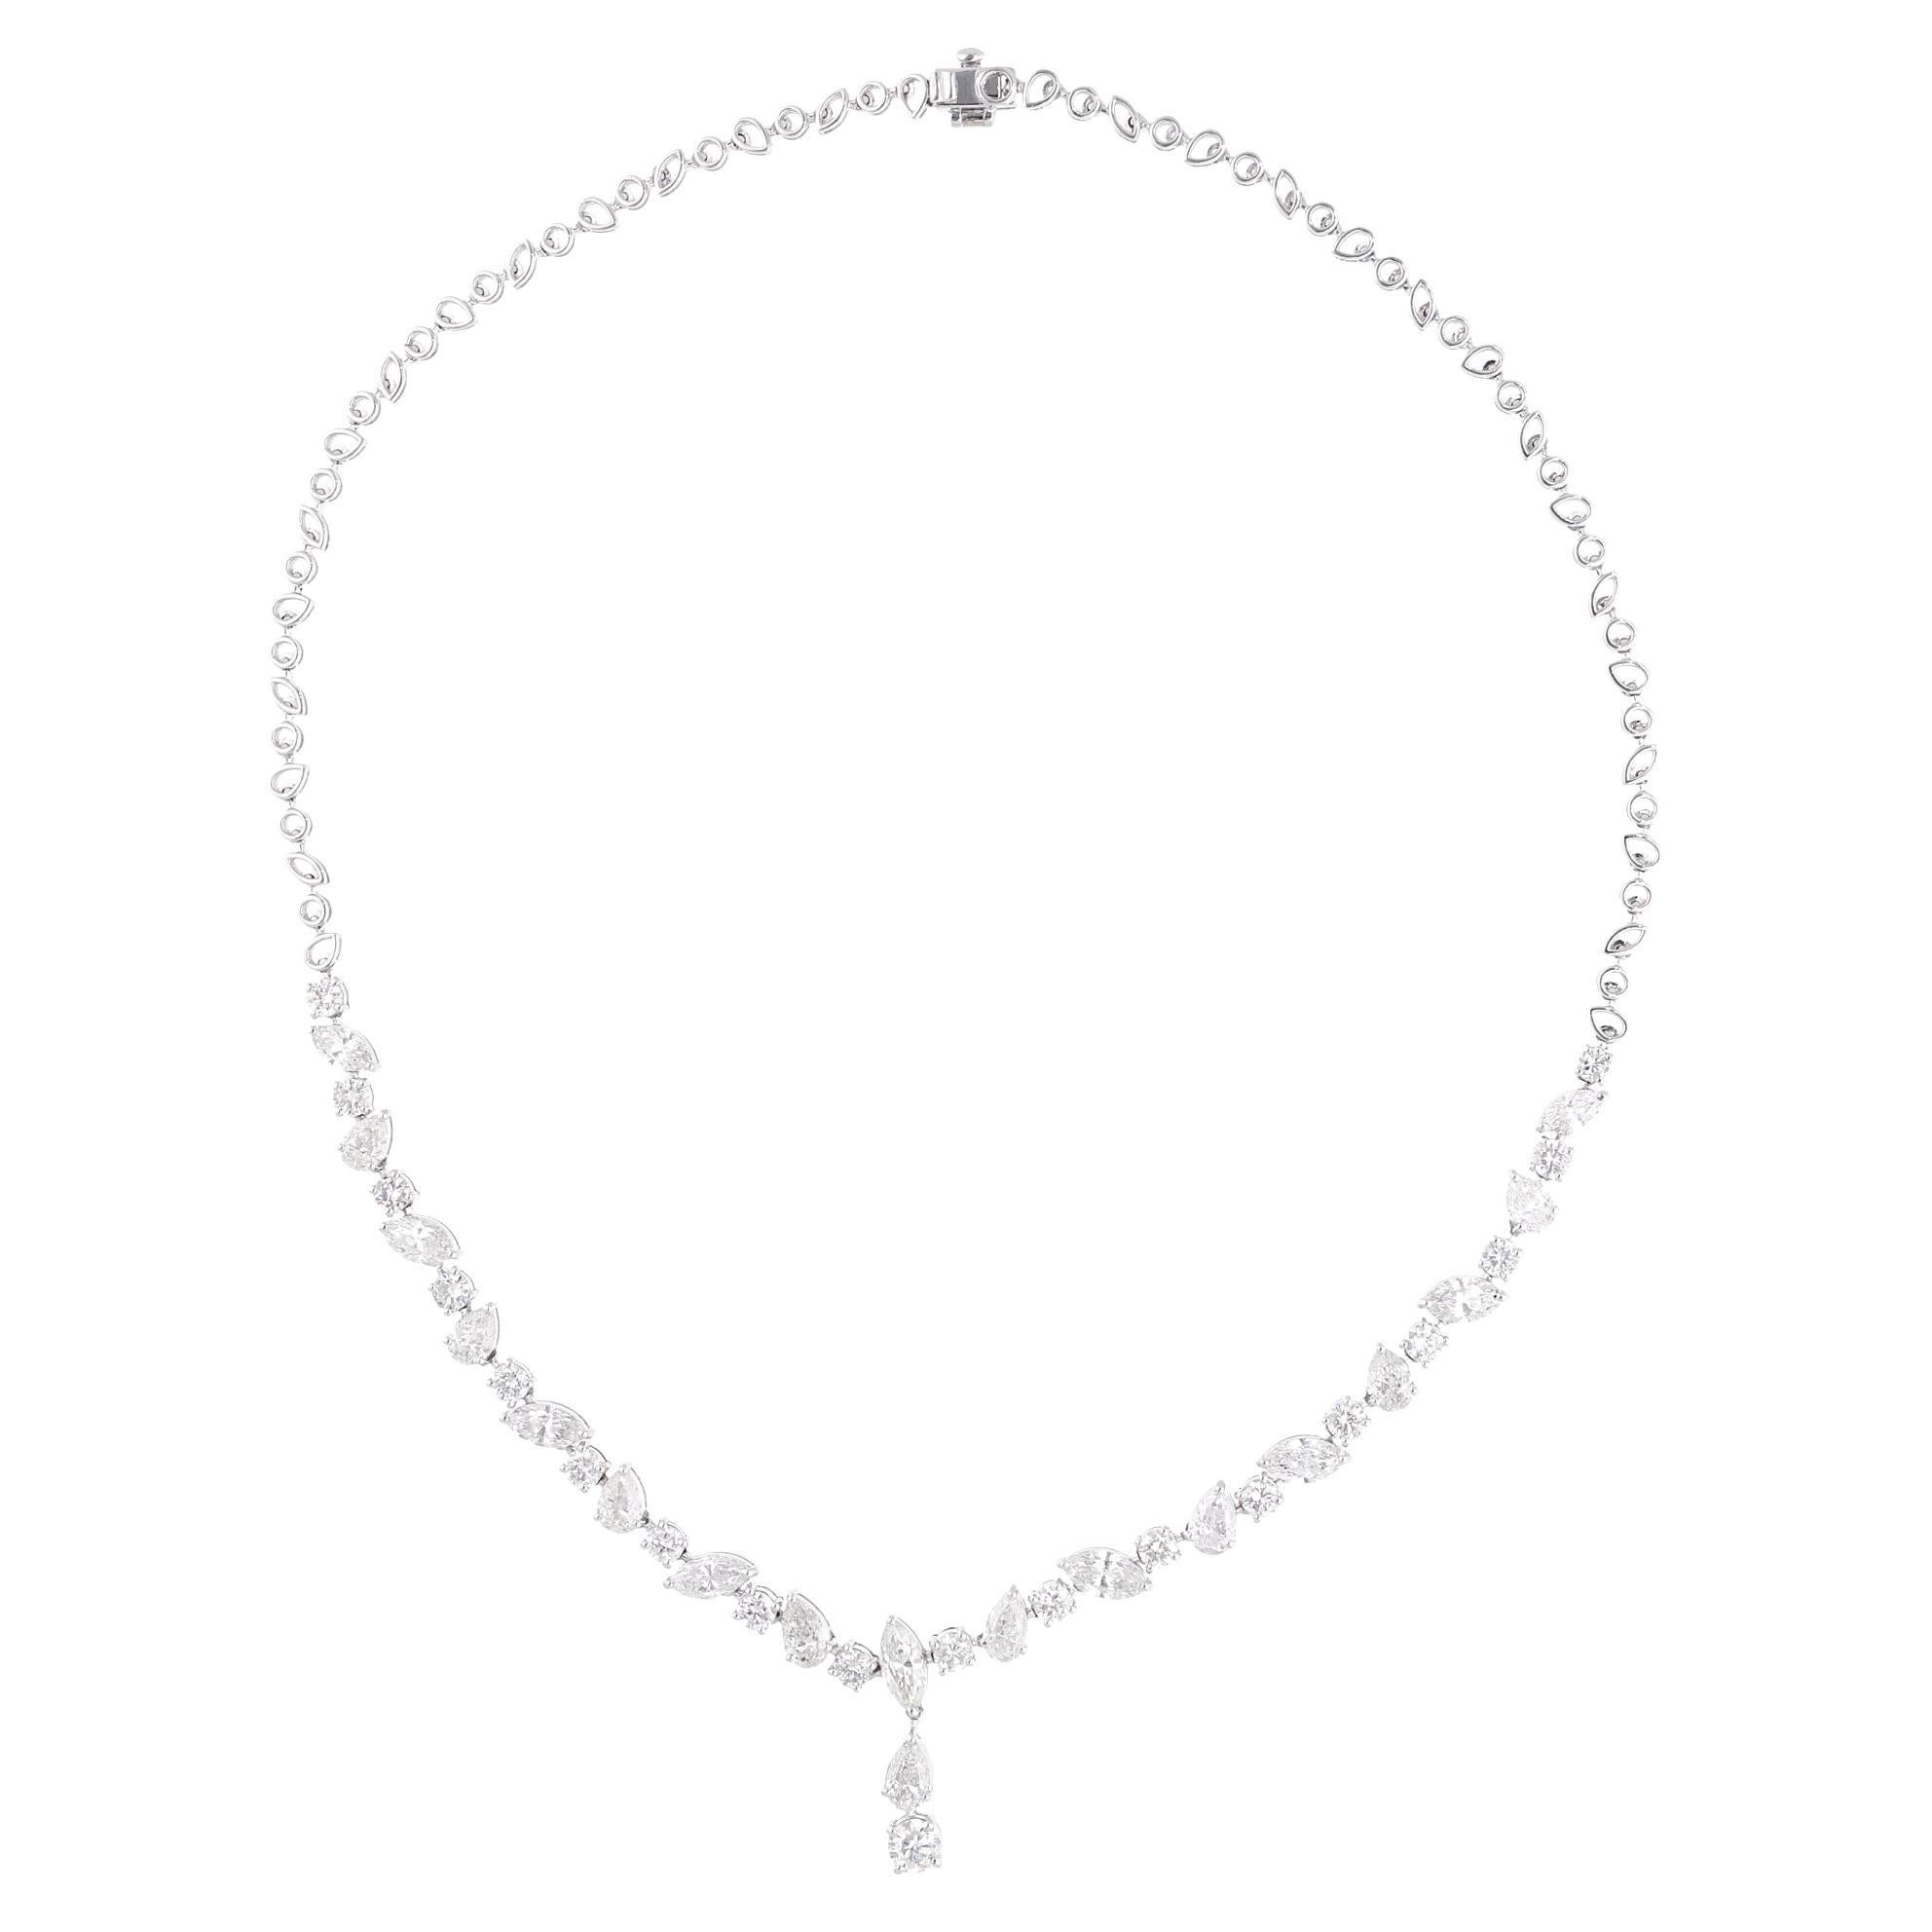 10.60 Carat SI Clarity HI Color Diamond Necklace 18 Karat White Gold Jewelry For Sale